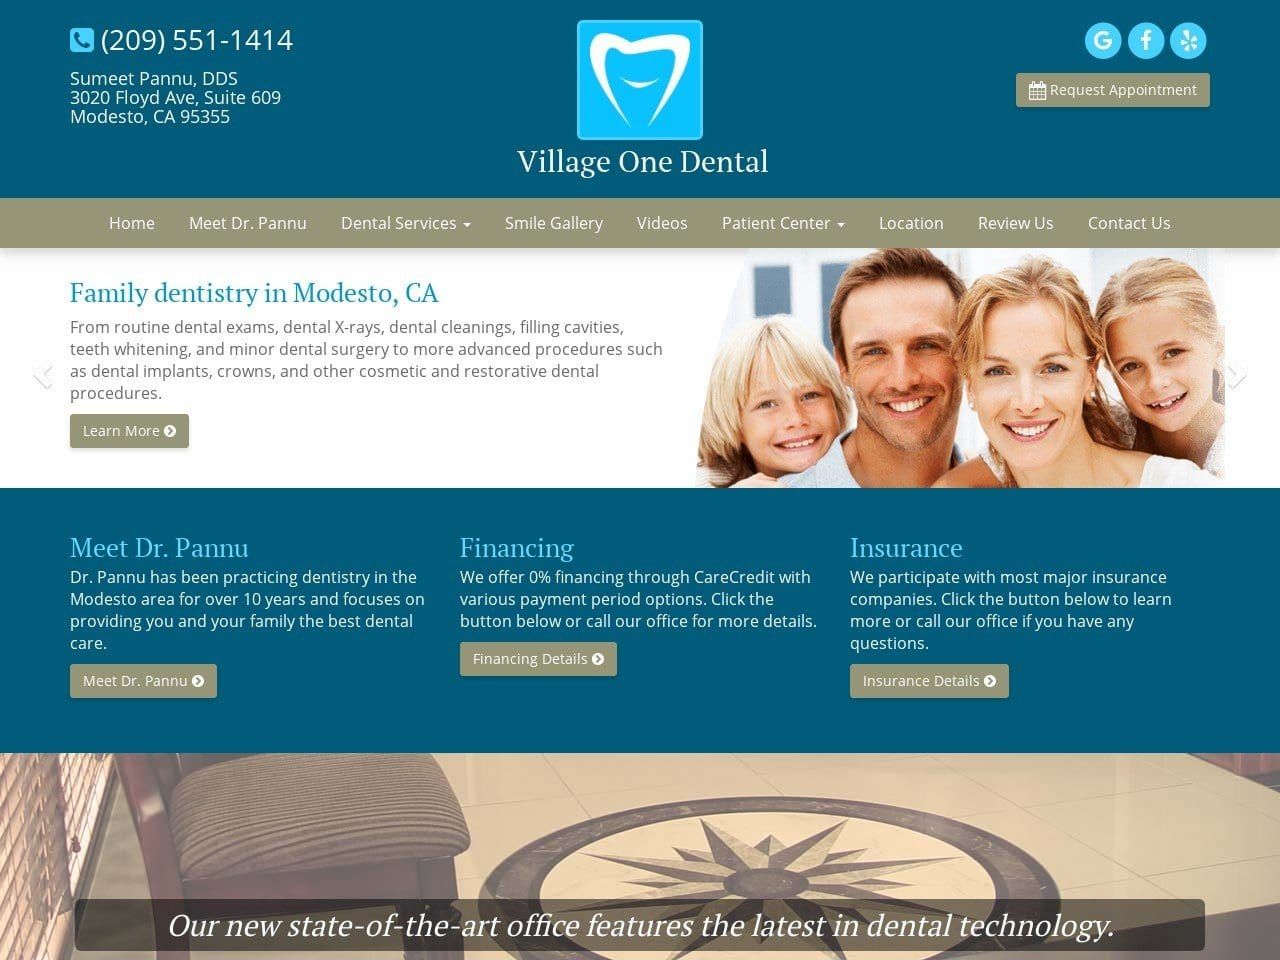 Village One Dental Website Screenshot from villageonedental.com